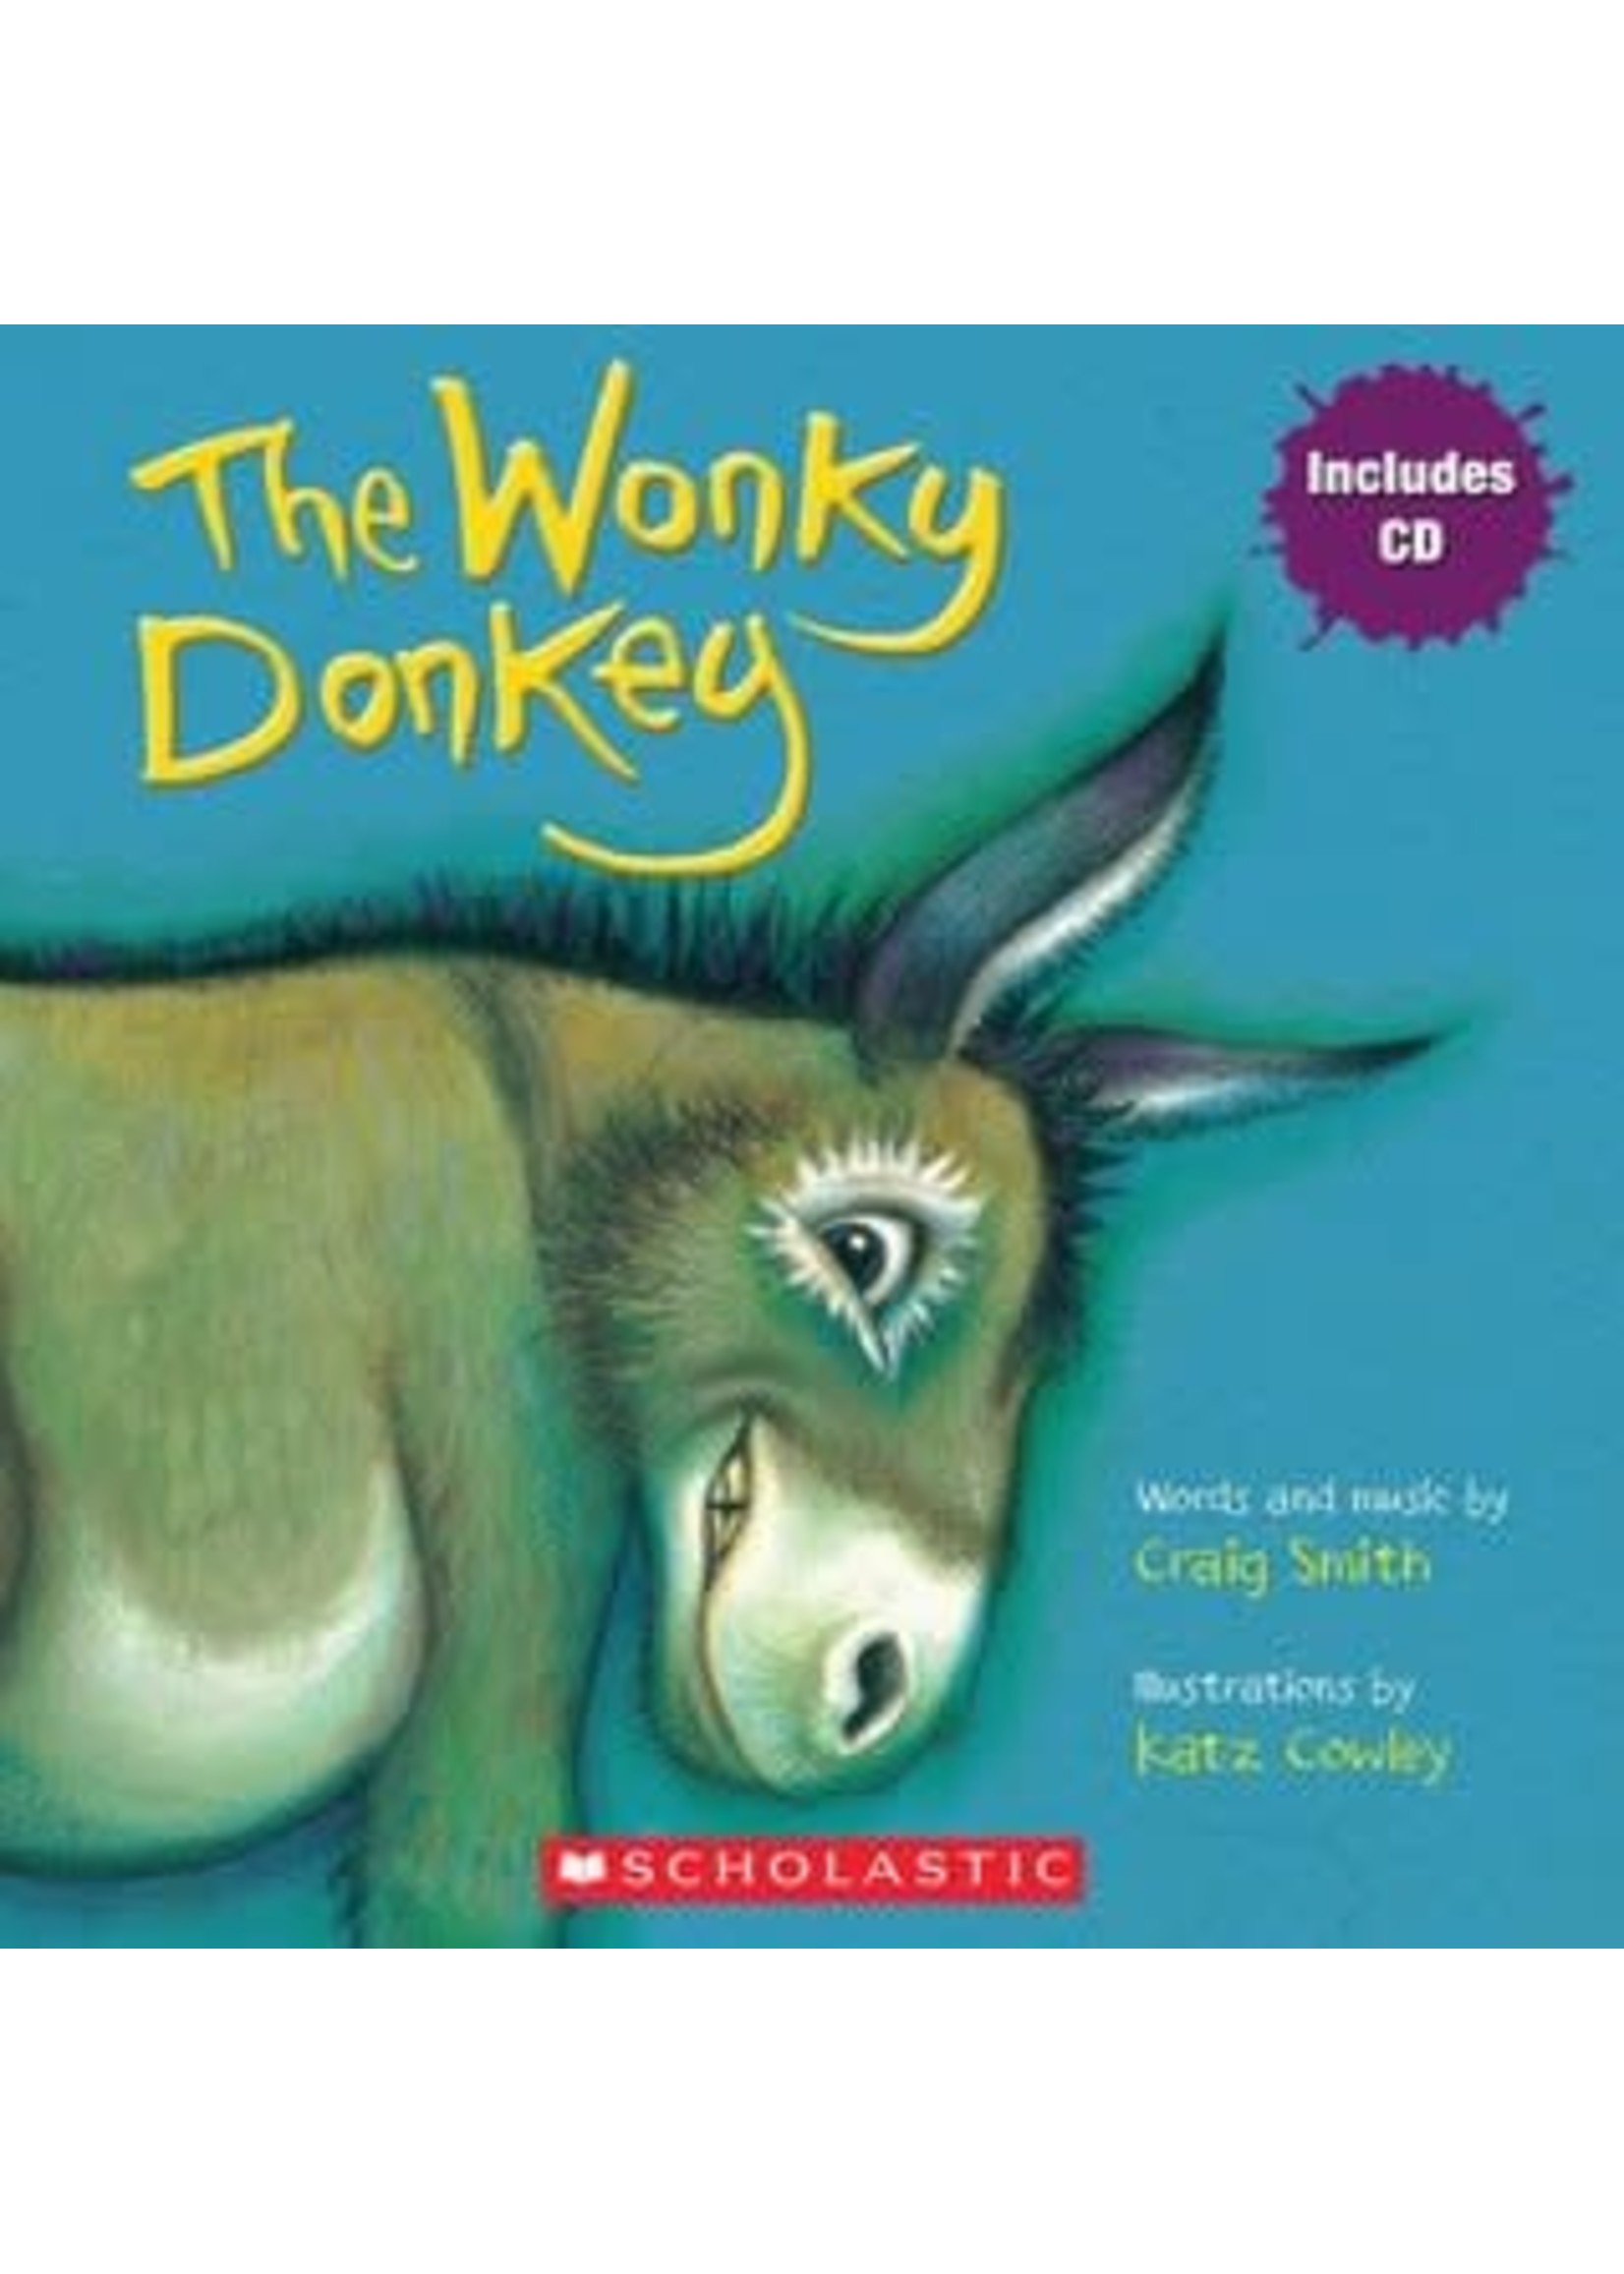 The Wonky Donkey by Craig Smith,  Katz Cowley